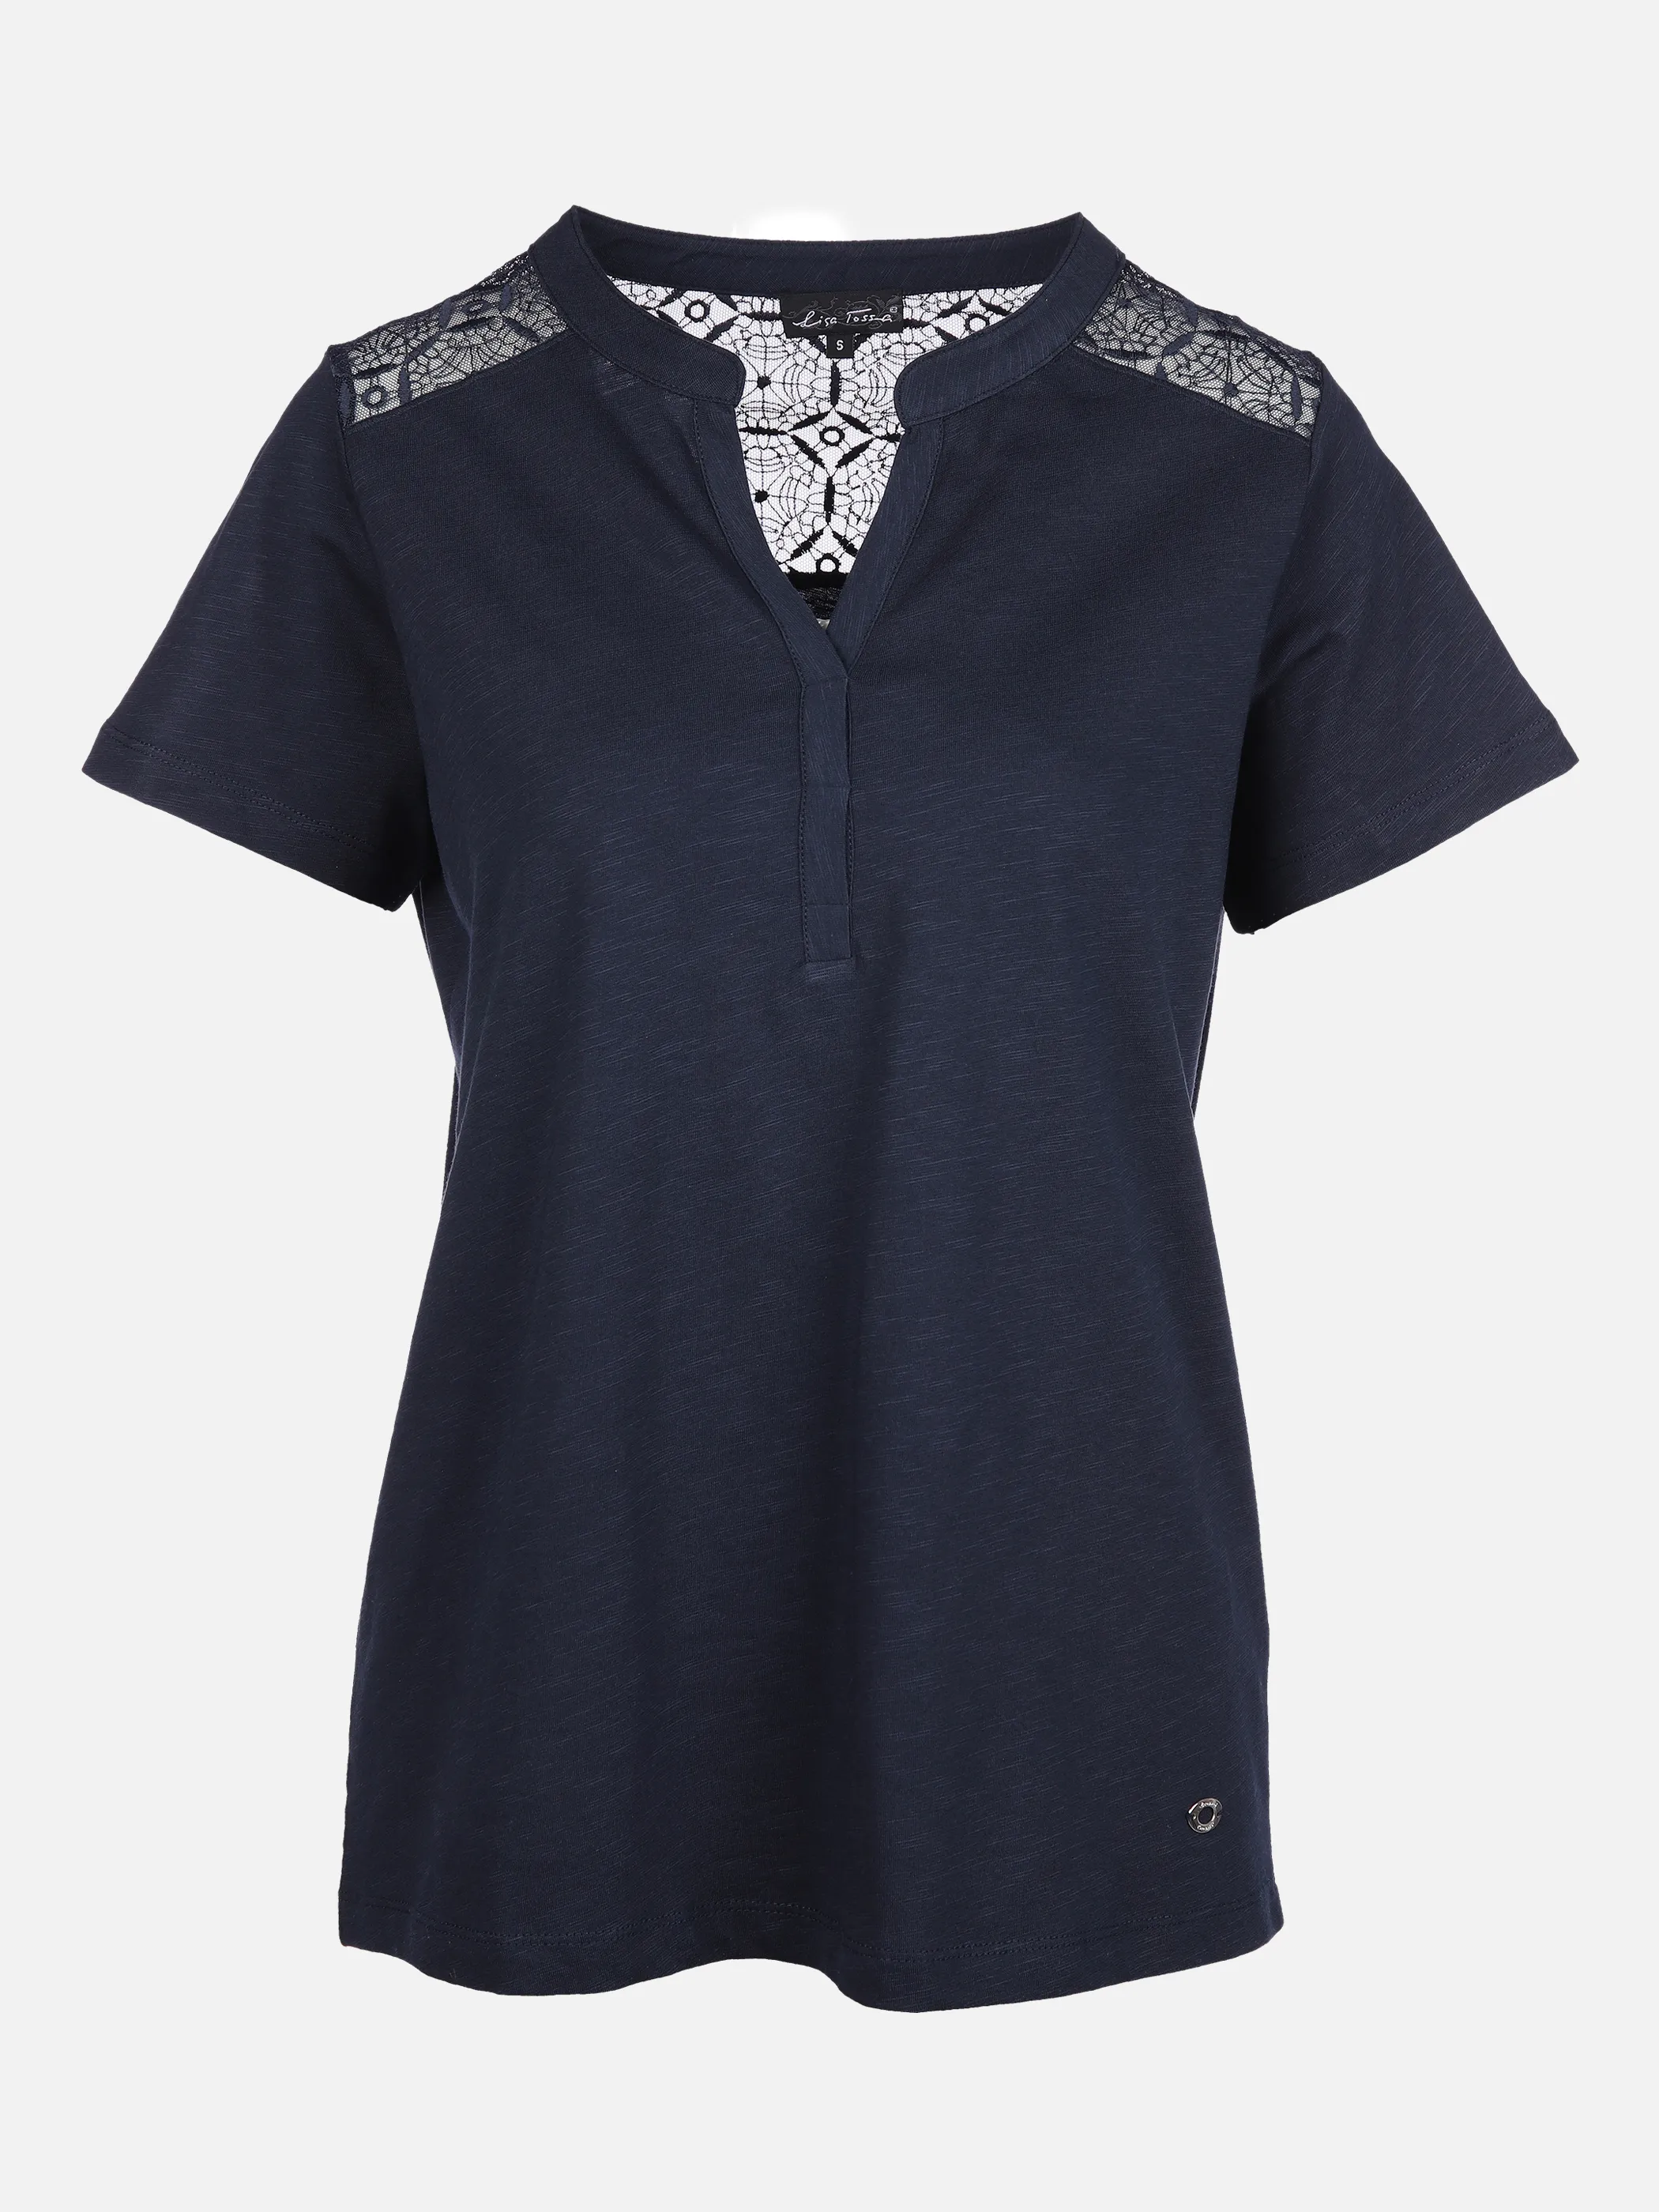 Lisa Tossa Da-T-Shirt in Materialmix Blau 864812 MARINE 1